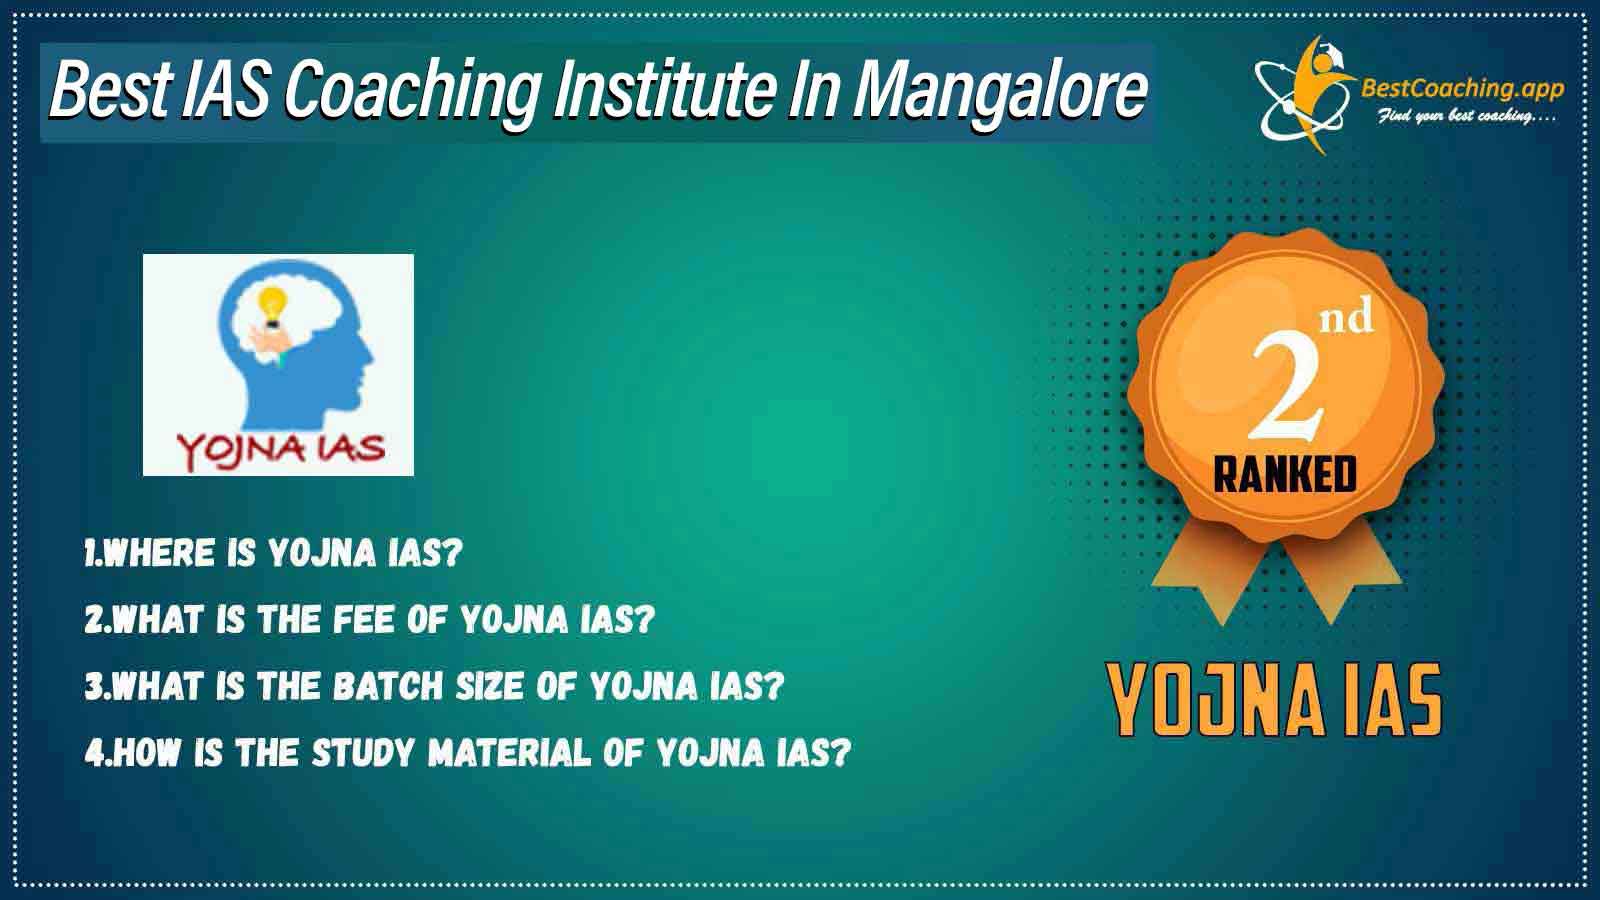 Rank 2 Top IAS Coaching in Mangalore